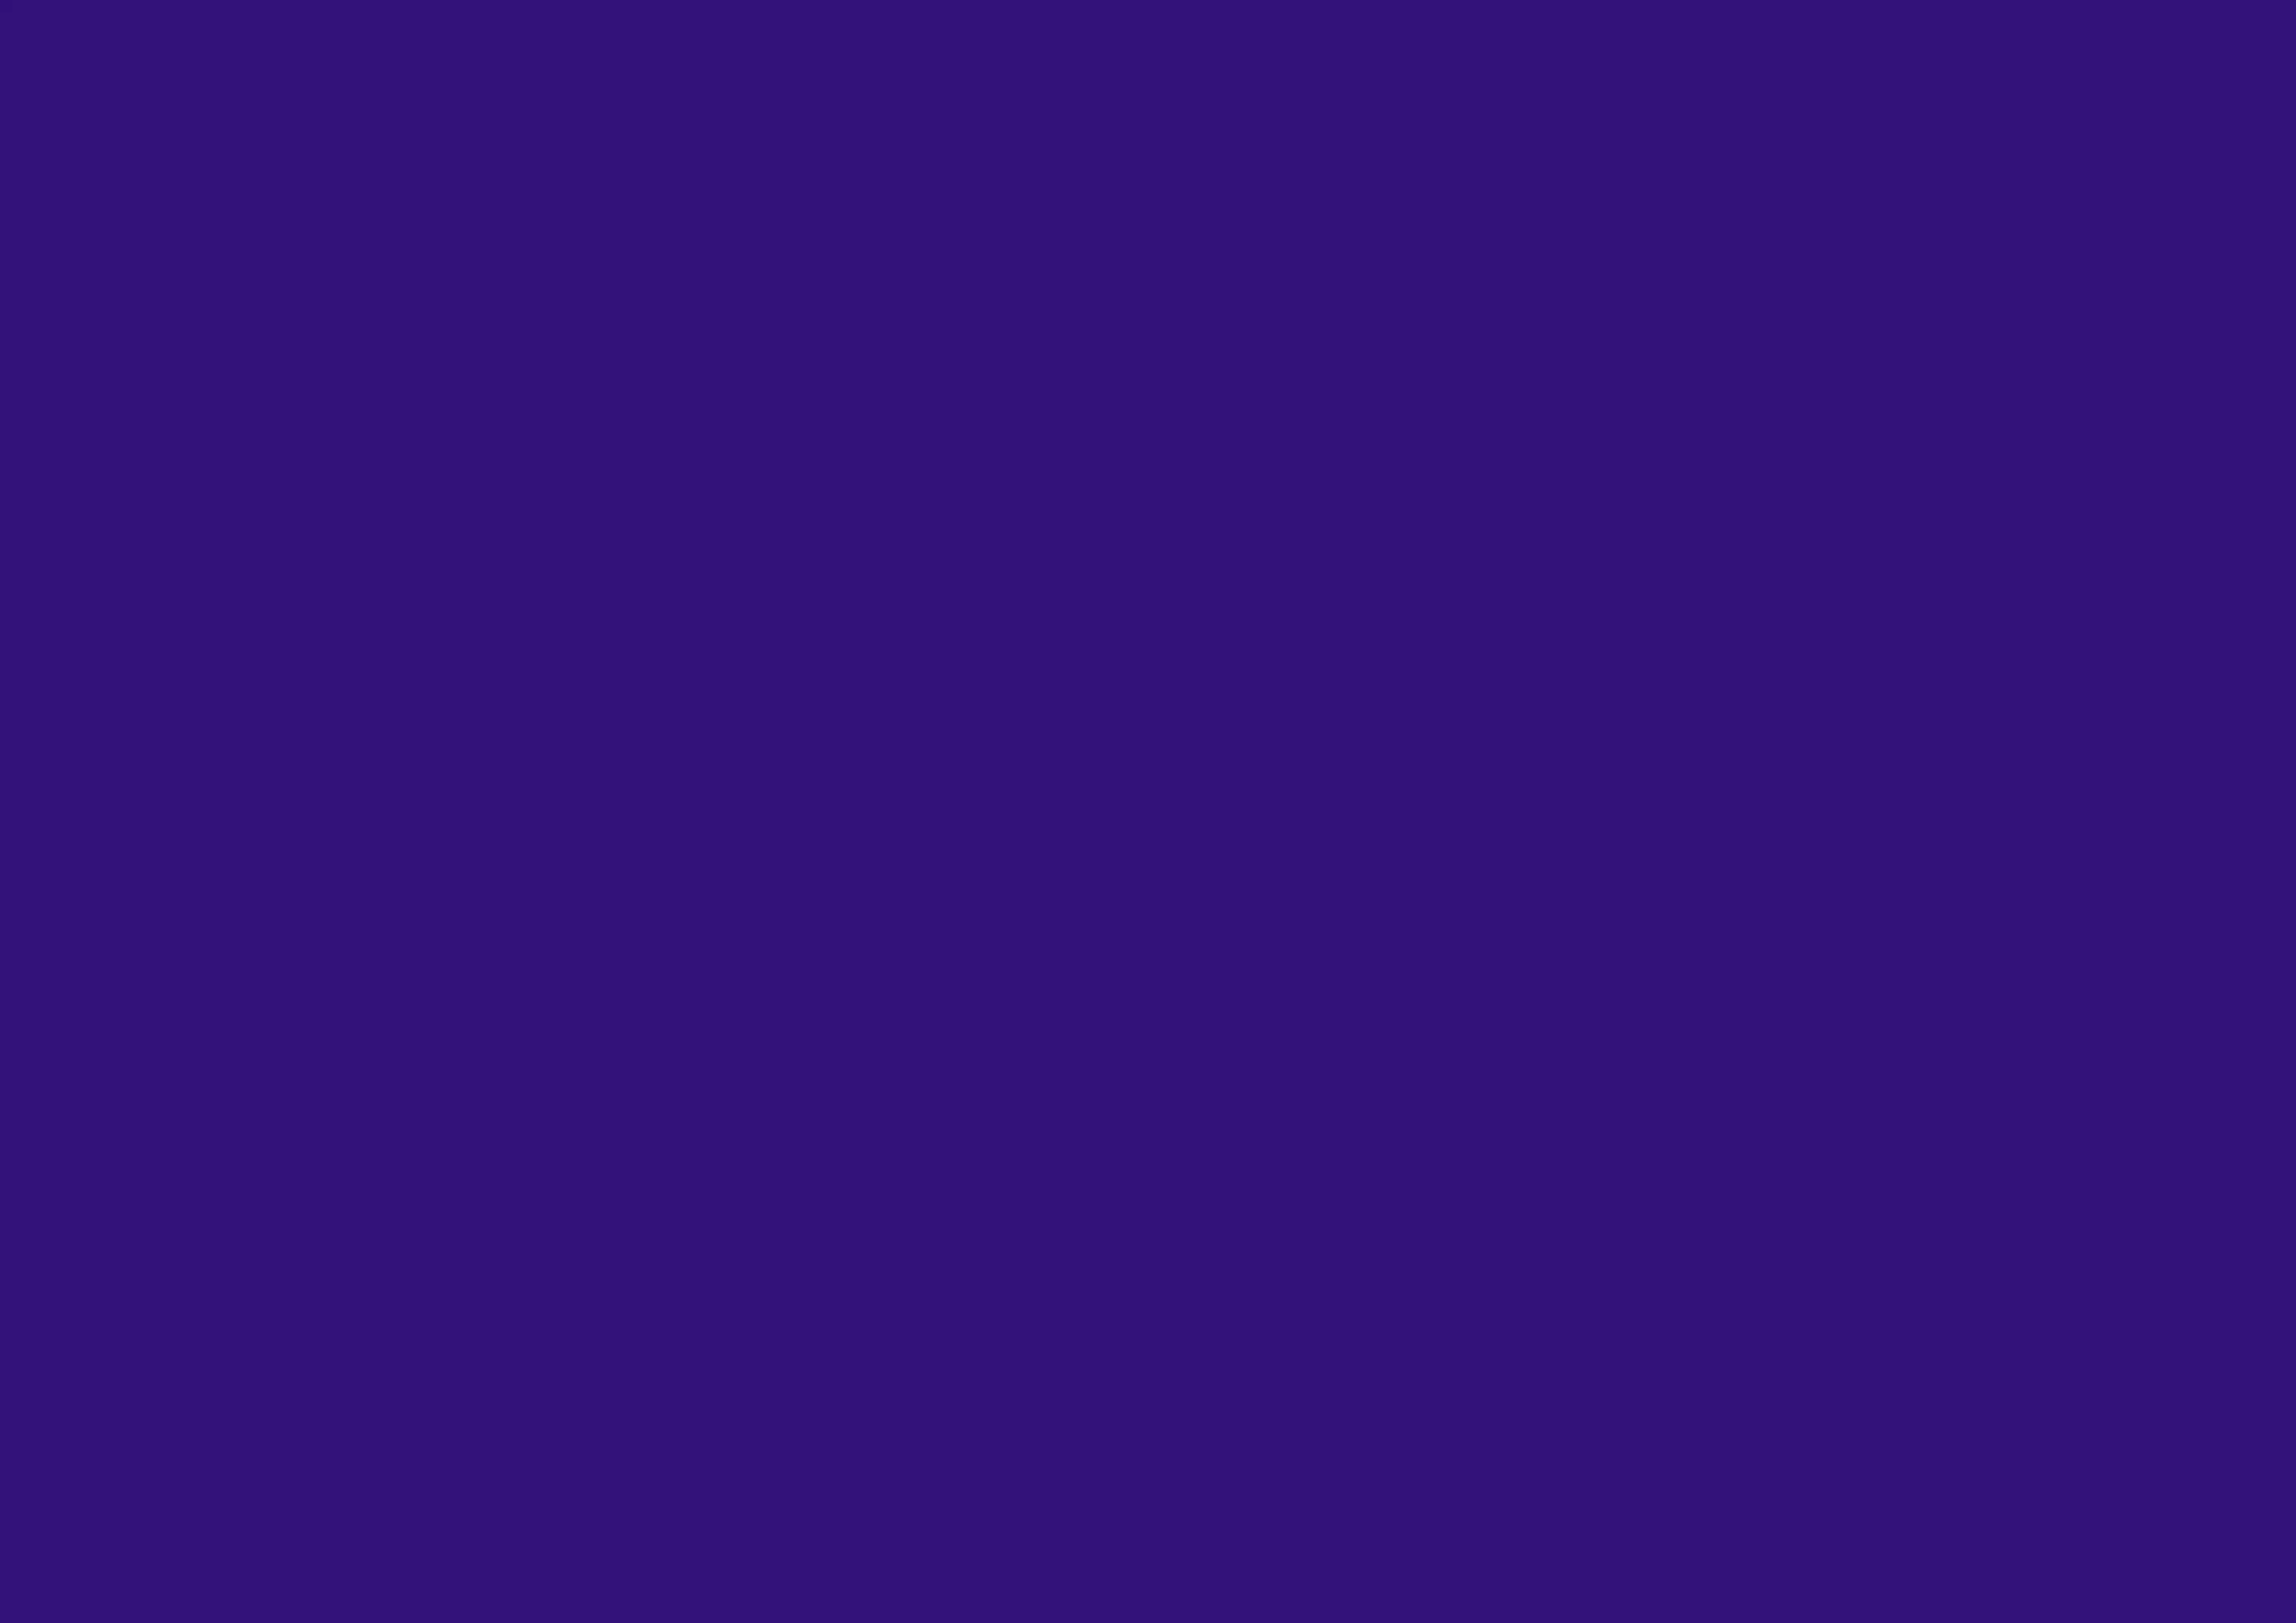 Технический цвет. RAL 5013. Краска RAL 5013 цвет. Сплошной синий цвет. Темно синий фон однотонный.